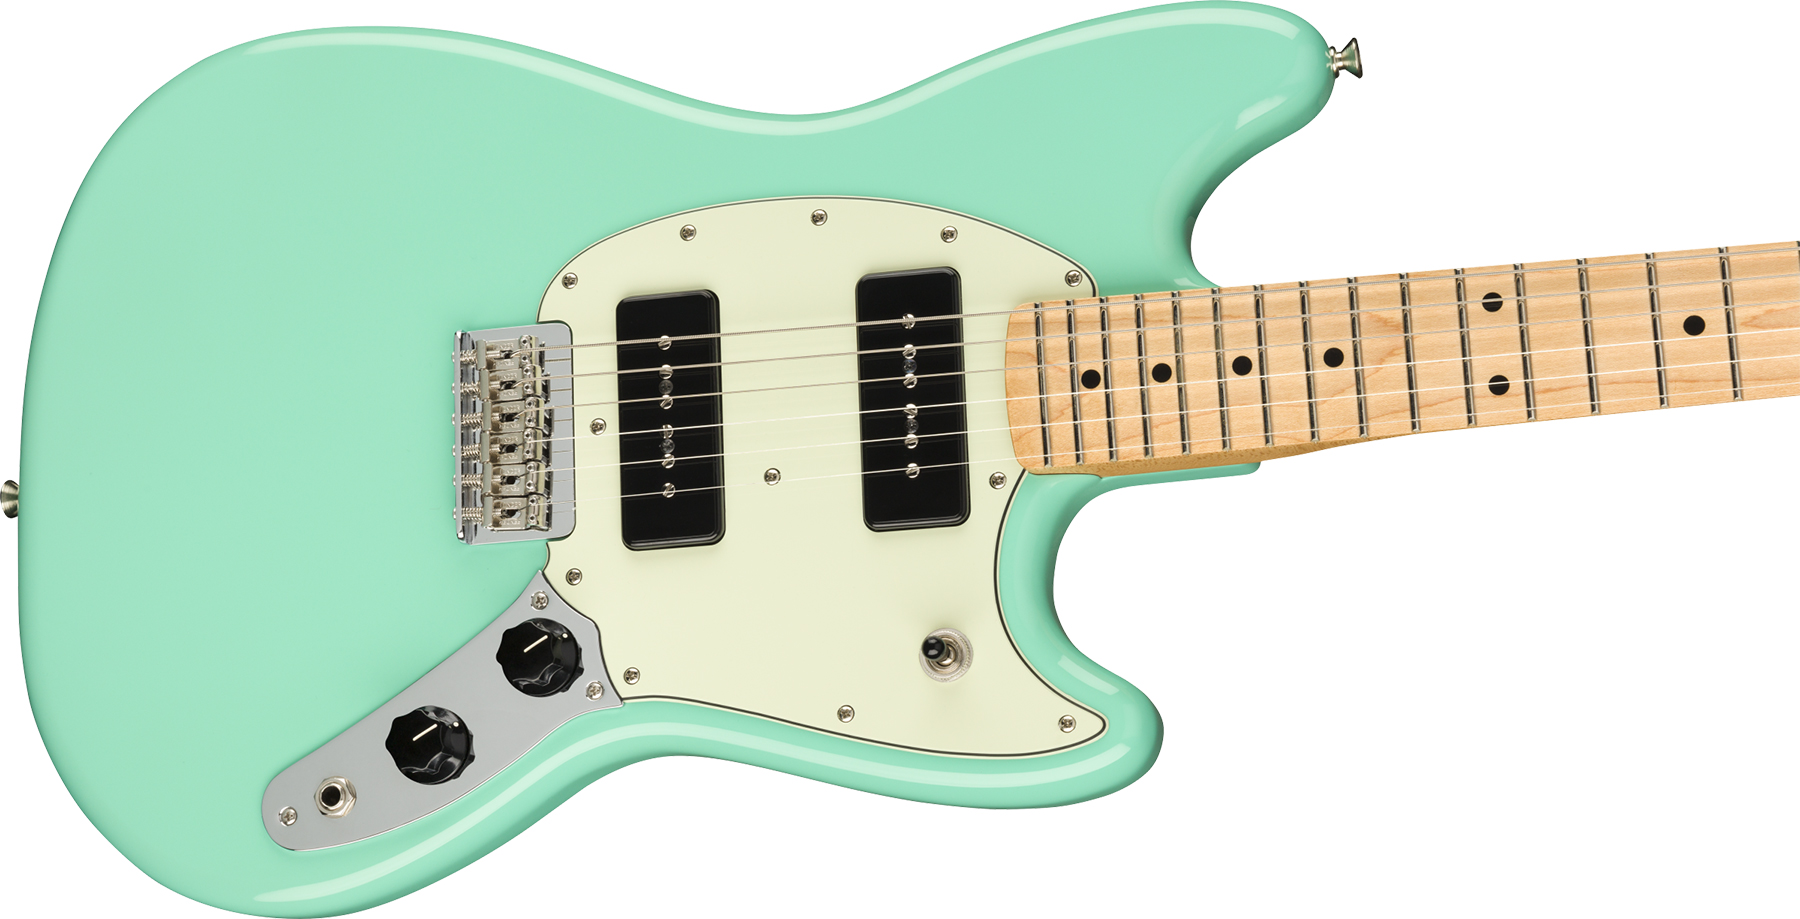 Fender Mustang Player 90 Mex Ht 2p90 Mn - Seafoam Green - Retro rock electric guitar - Variation 2